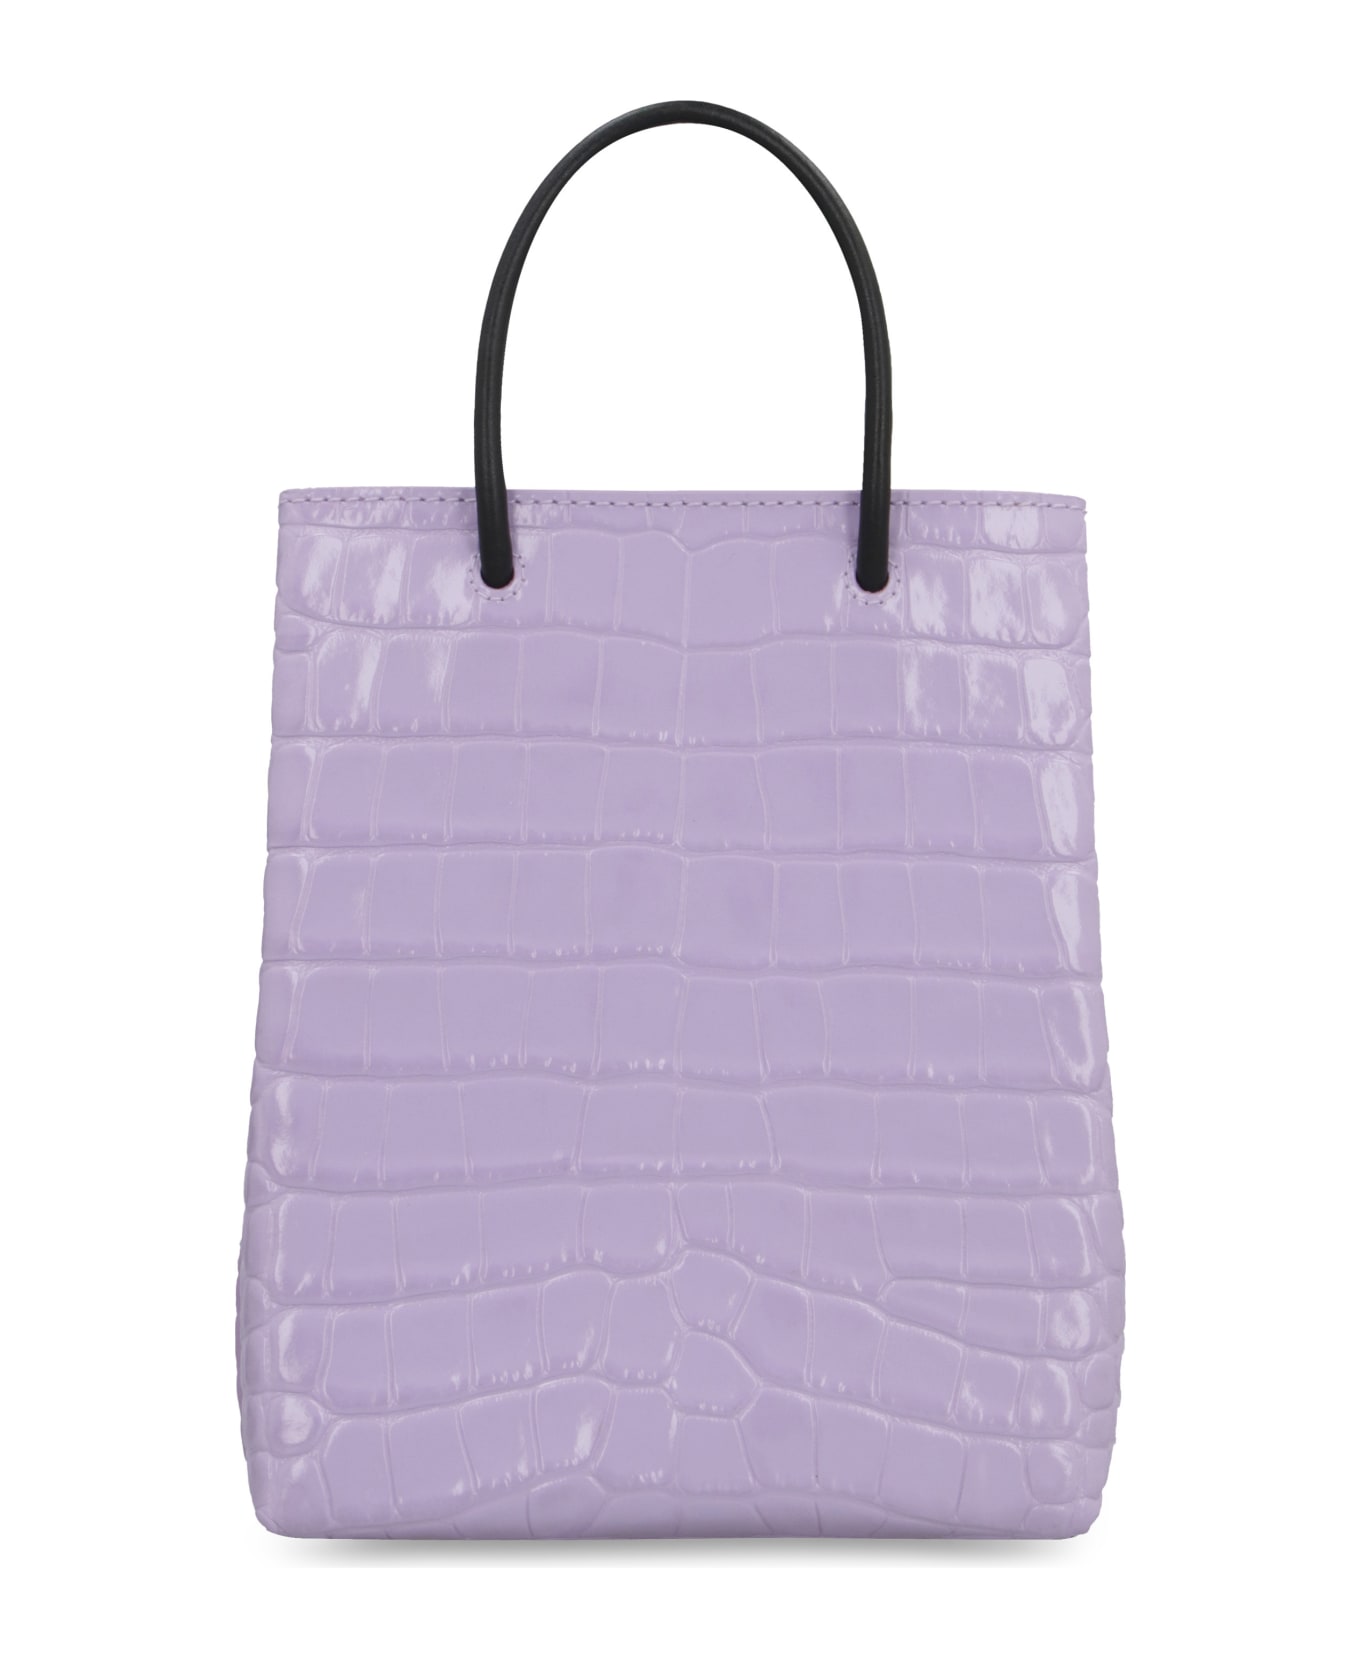 Balenciaga Croco-print Leather Bag - Lilac